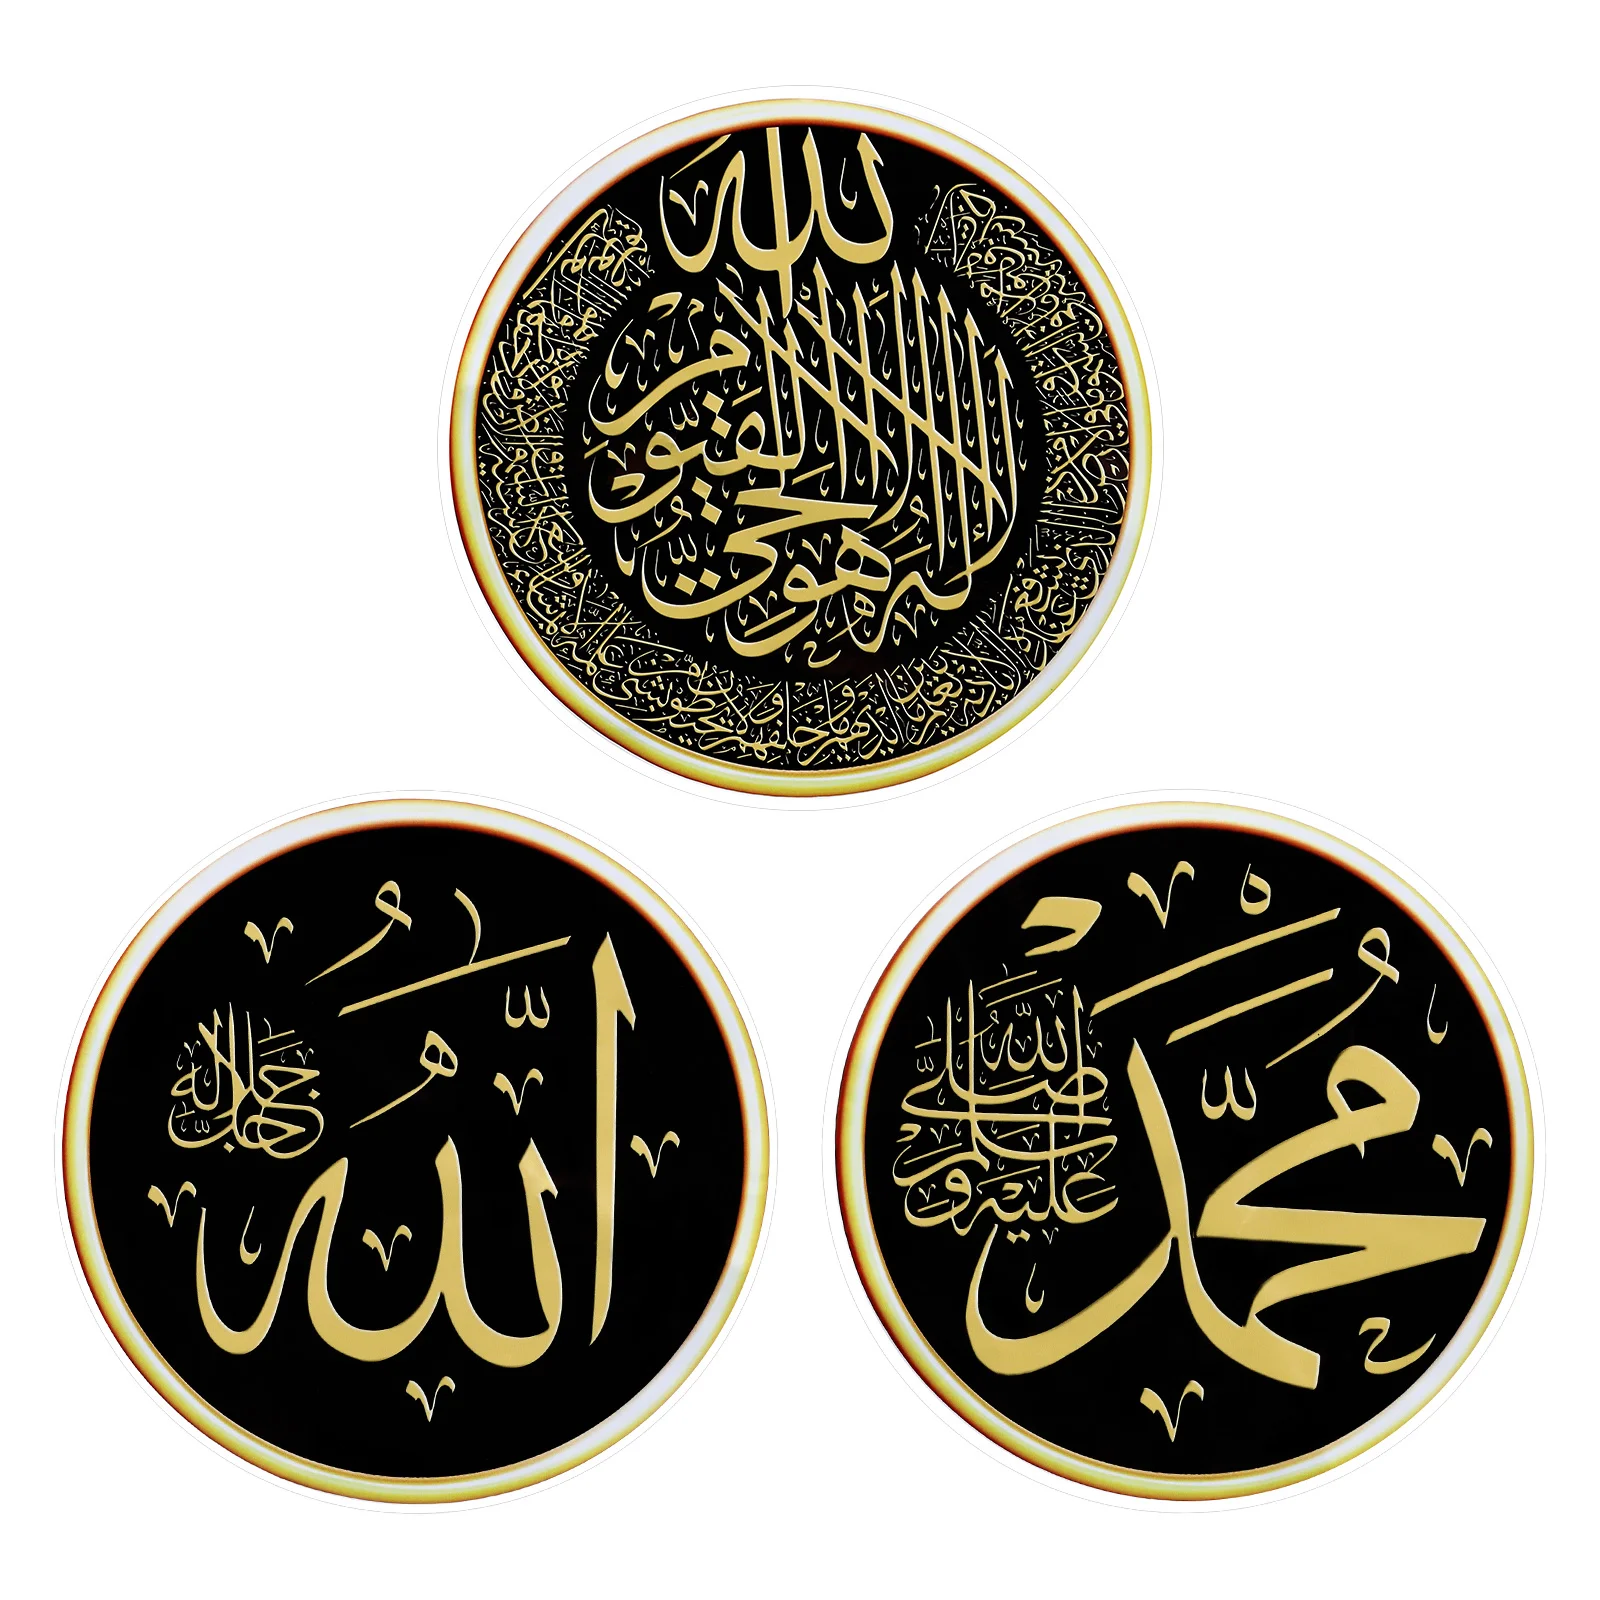 

Wall Ramadan Decal Muslim Decor Islamic Stickers Decorations Sticker Eid Mubarak Home Culture Decalsart Removable Gifts